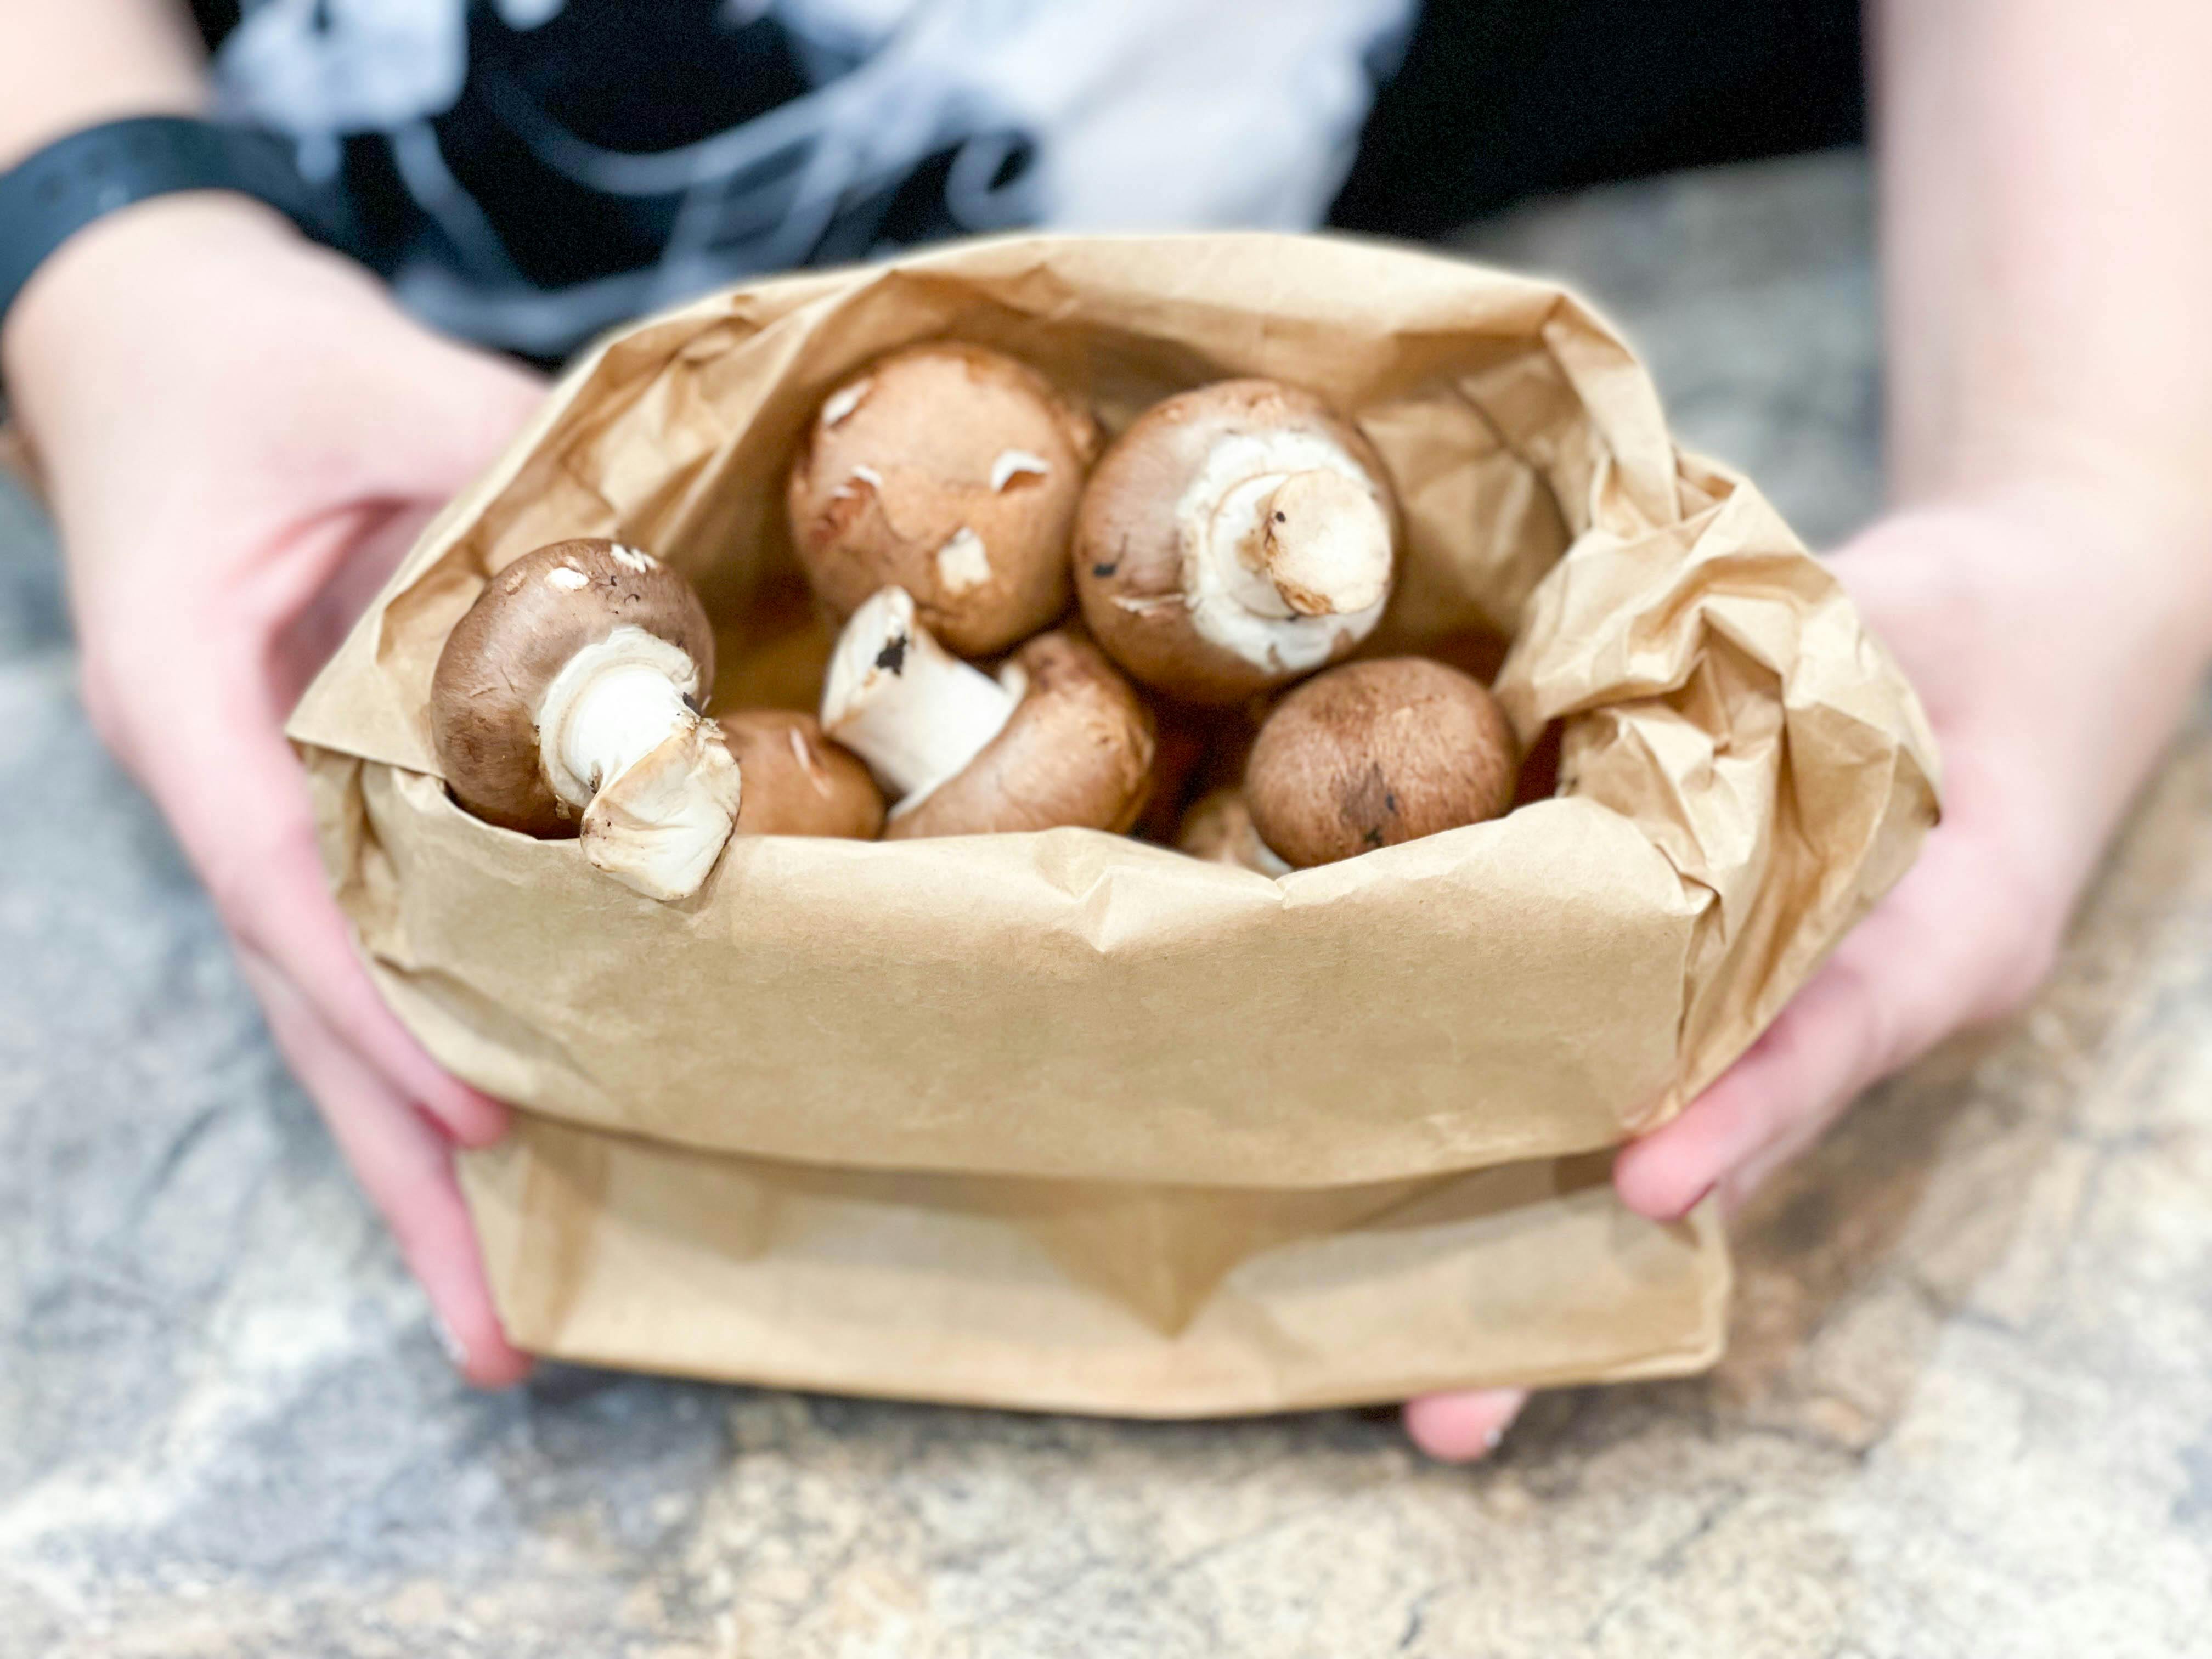 mushrooms in a paper bags